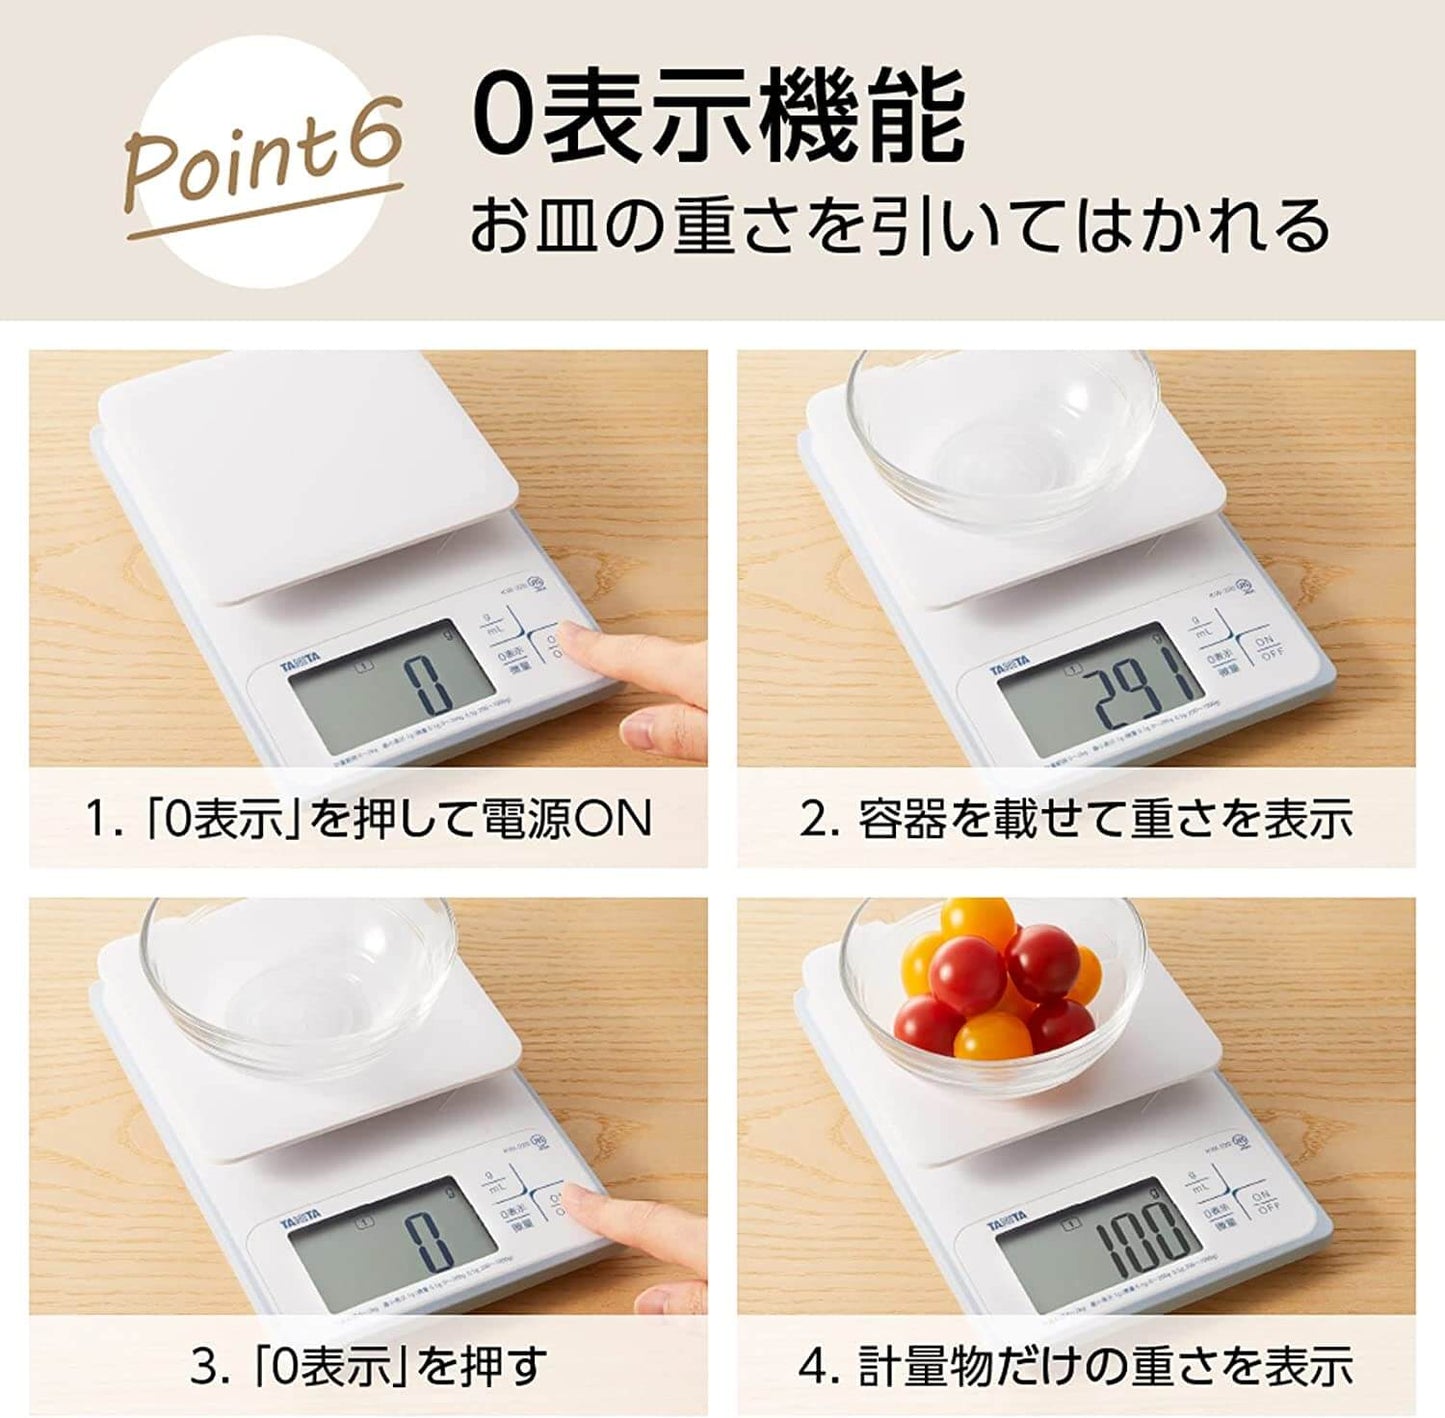 Waterproof Cooking Scale KW-220 - imy Shop Japan